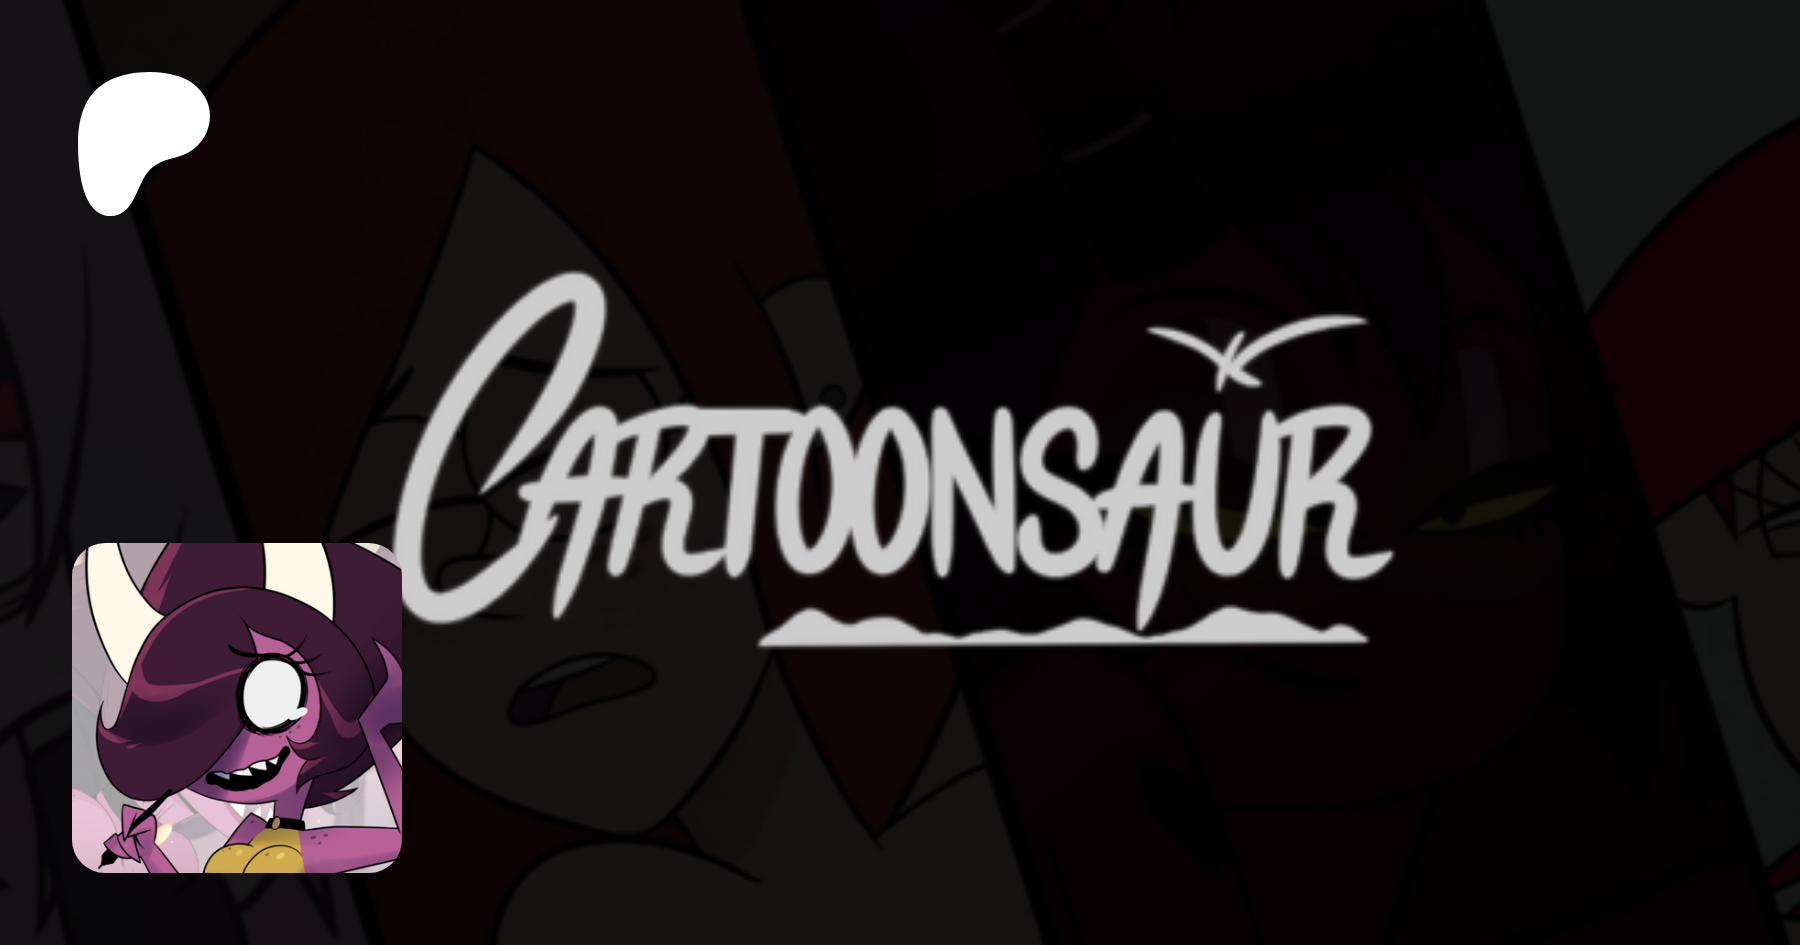 Cartoonsaur patreon